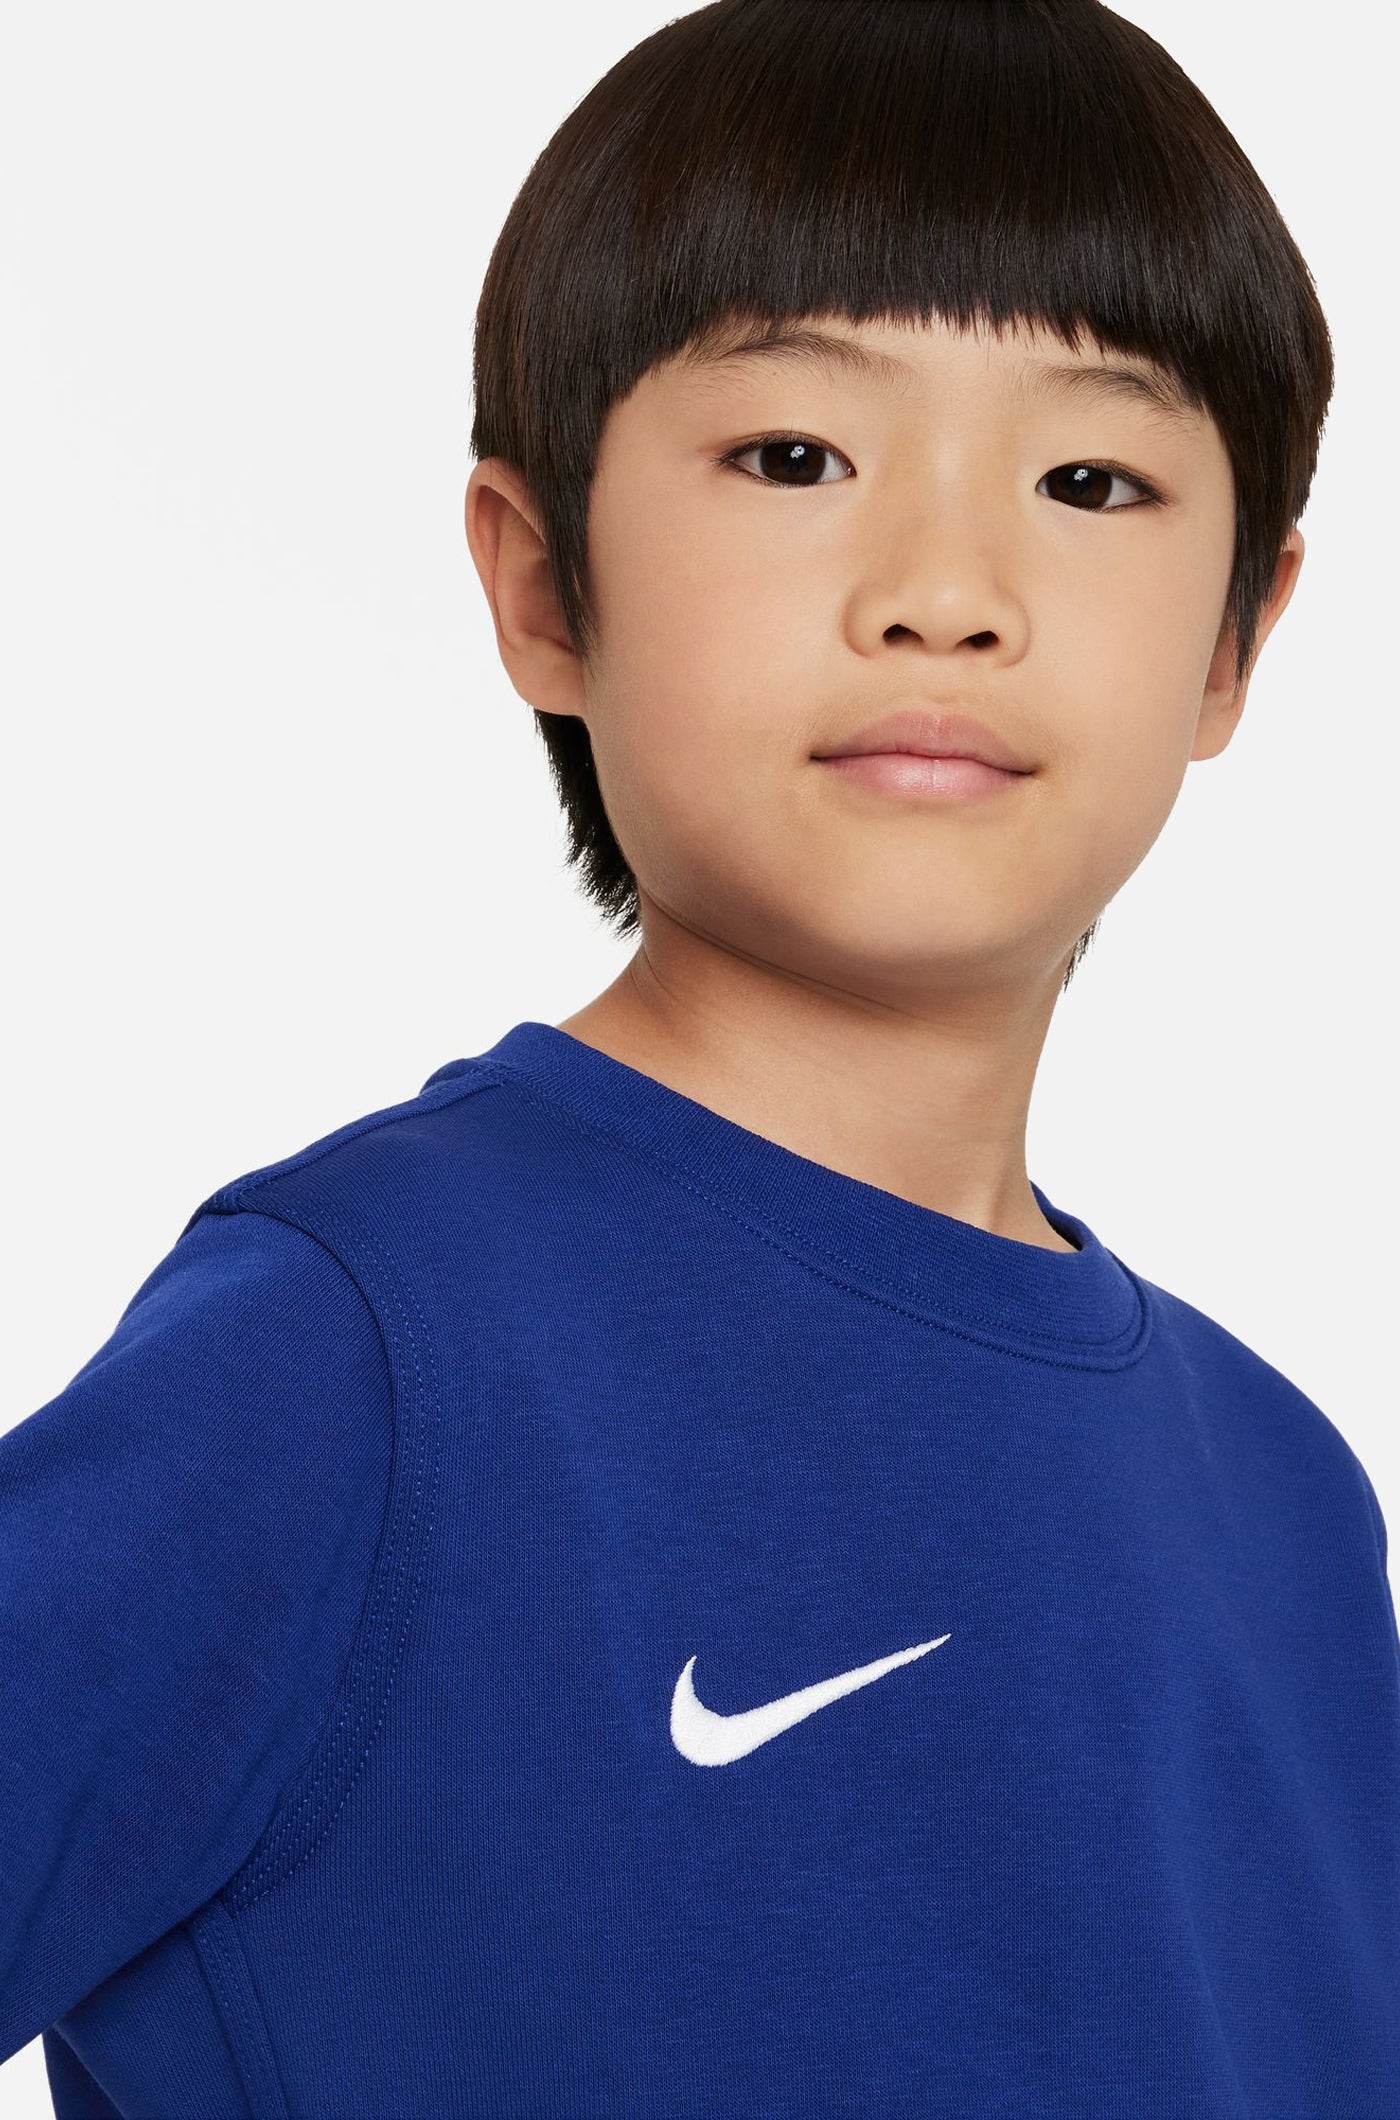 Sweatshirt som un equip Barça Nike - Junior